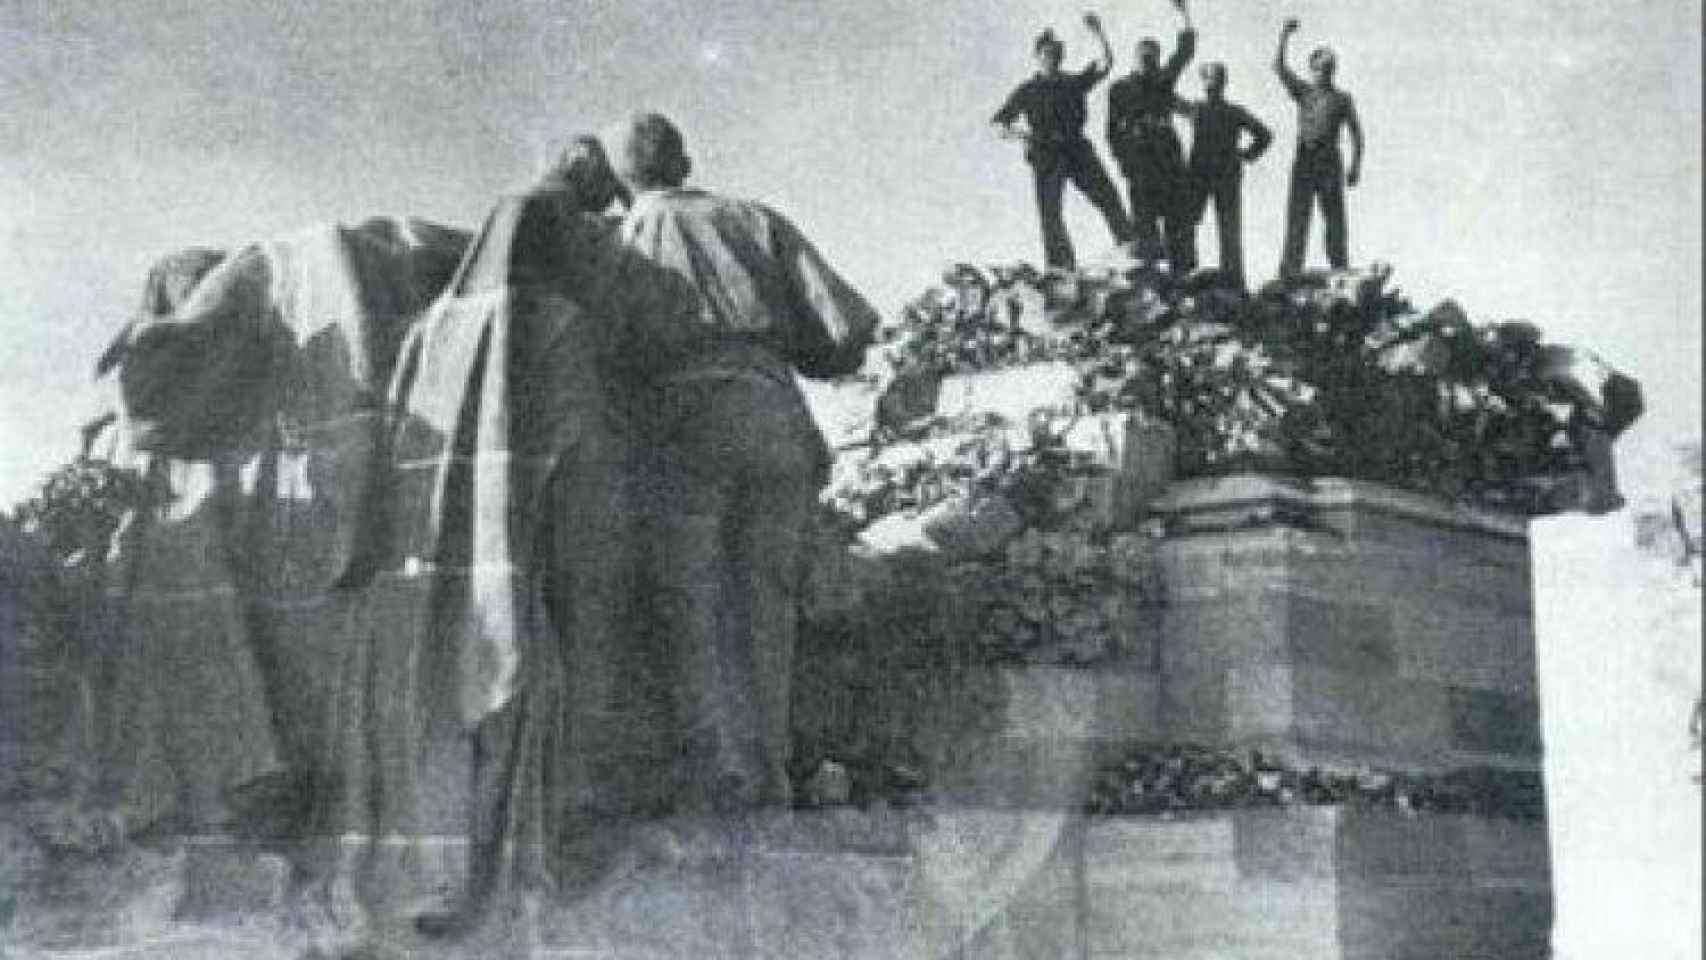 Milicianos celebrando la toma del cerro